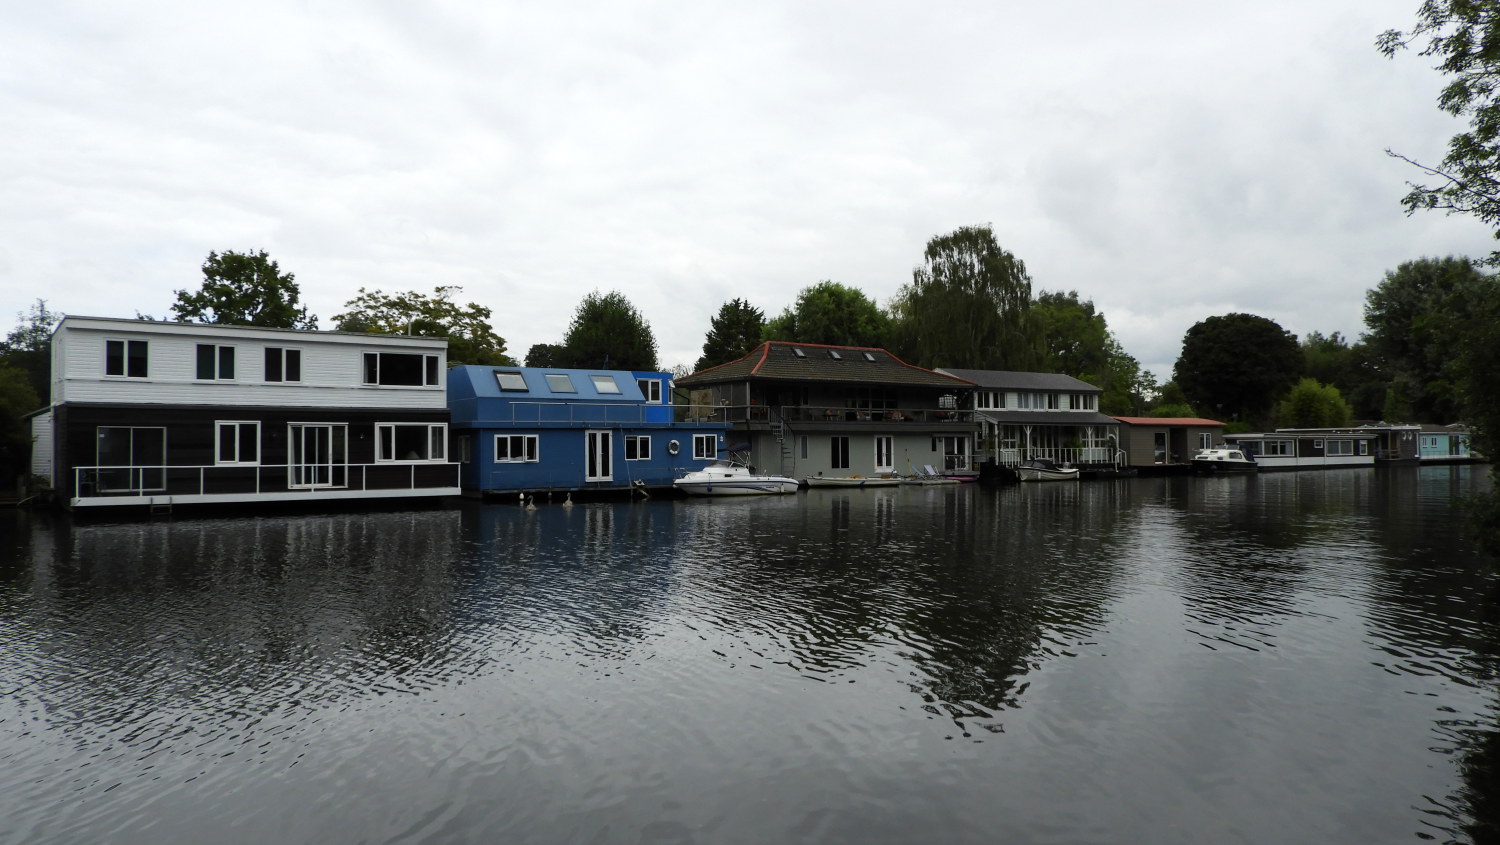 Posh Thames houseboats at Hurst Park